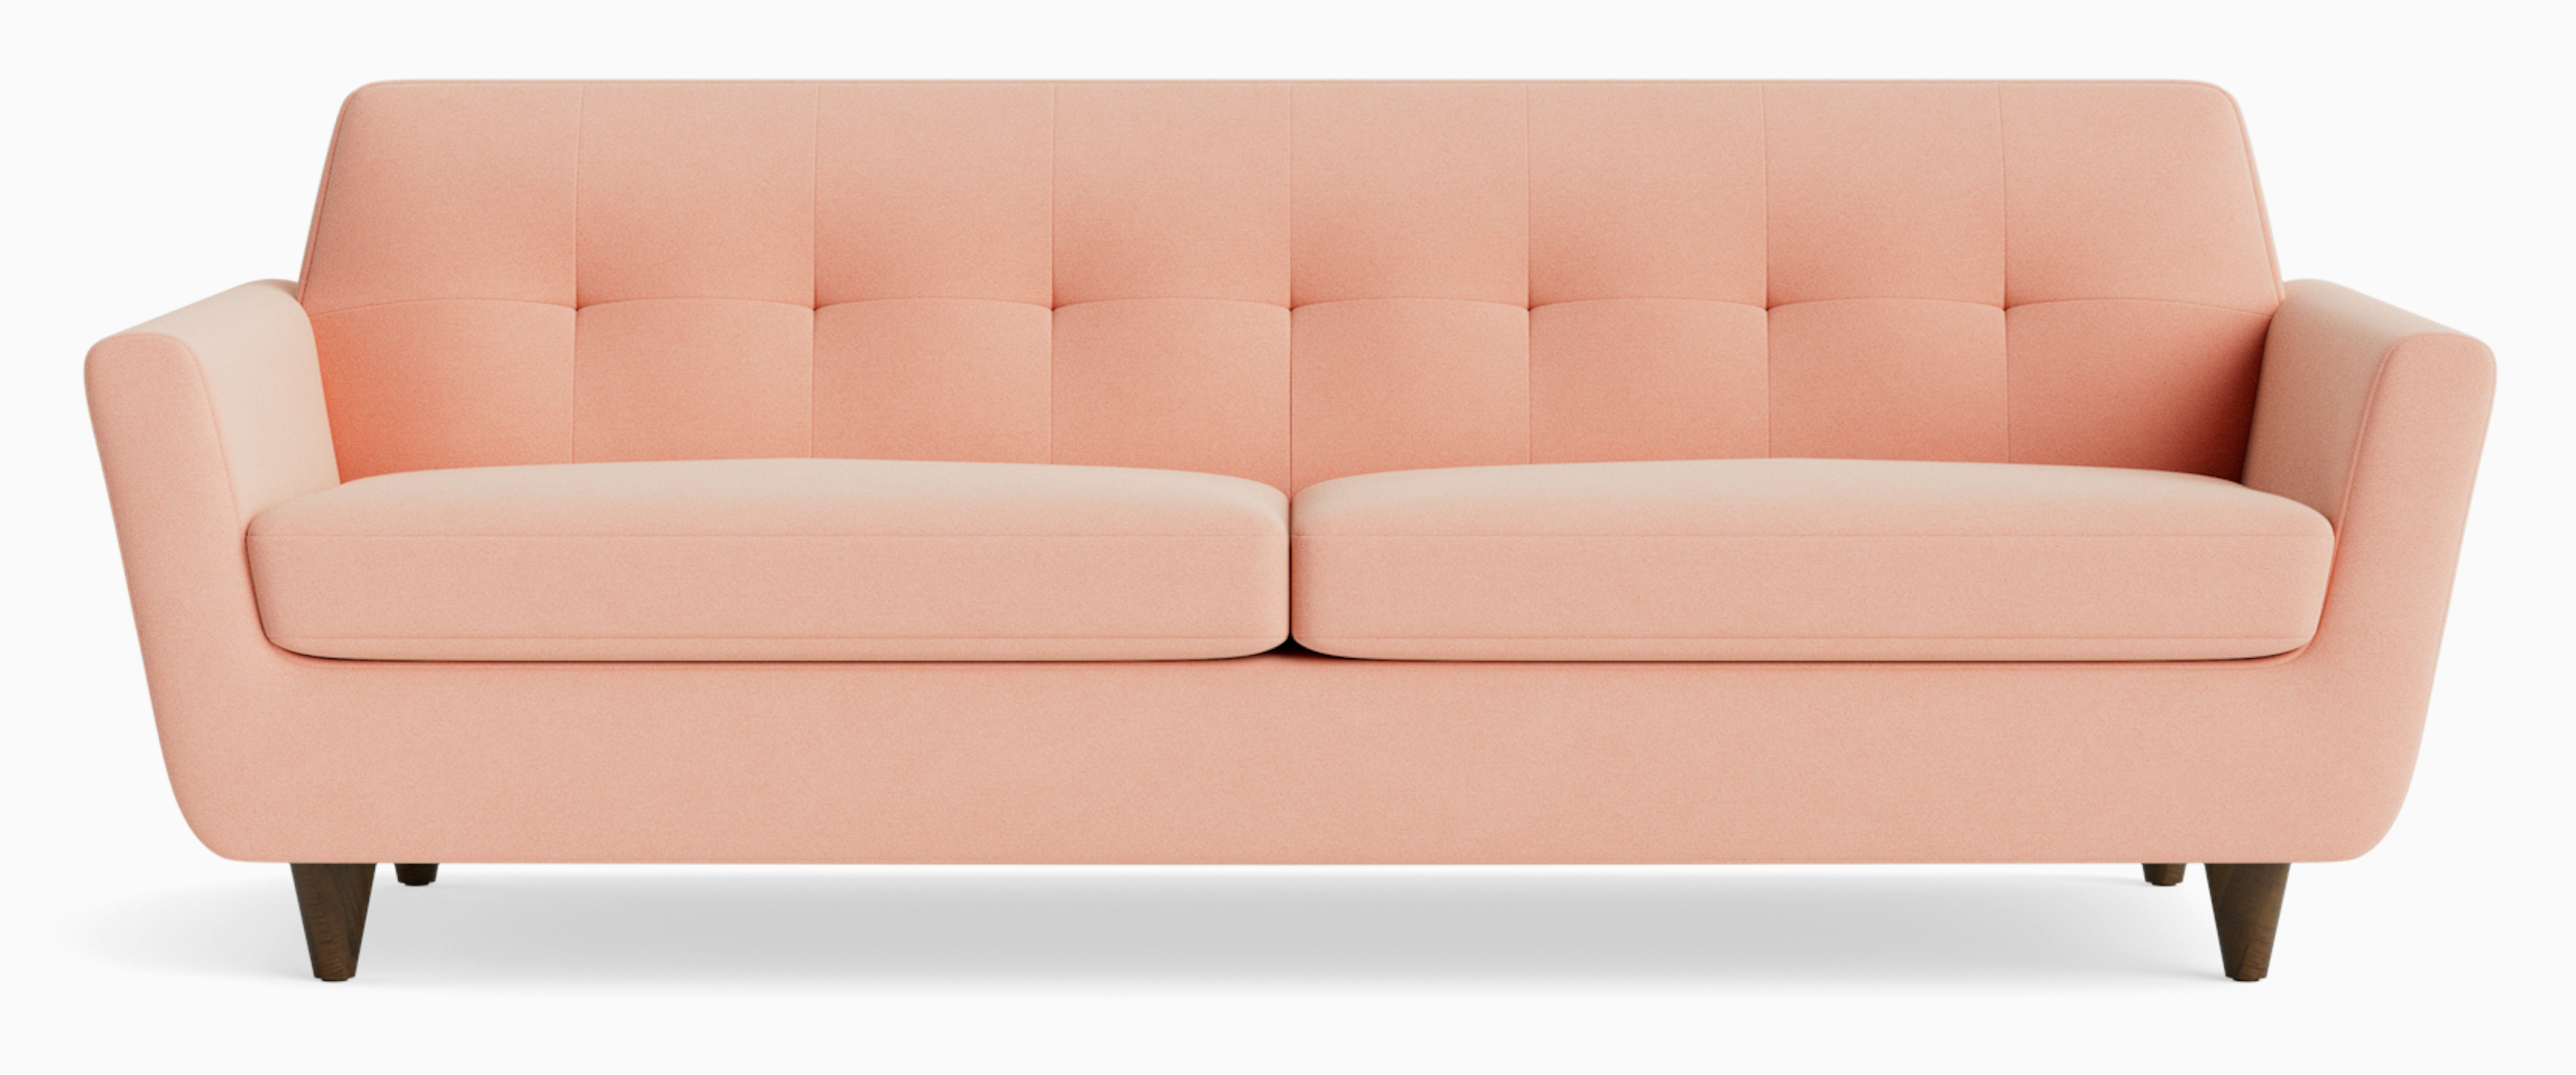 best sofa beds joybird